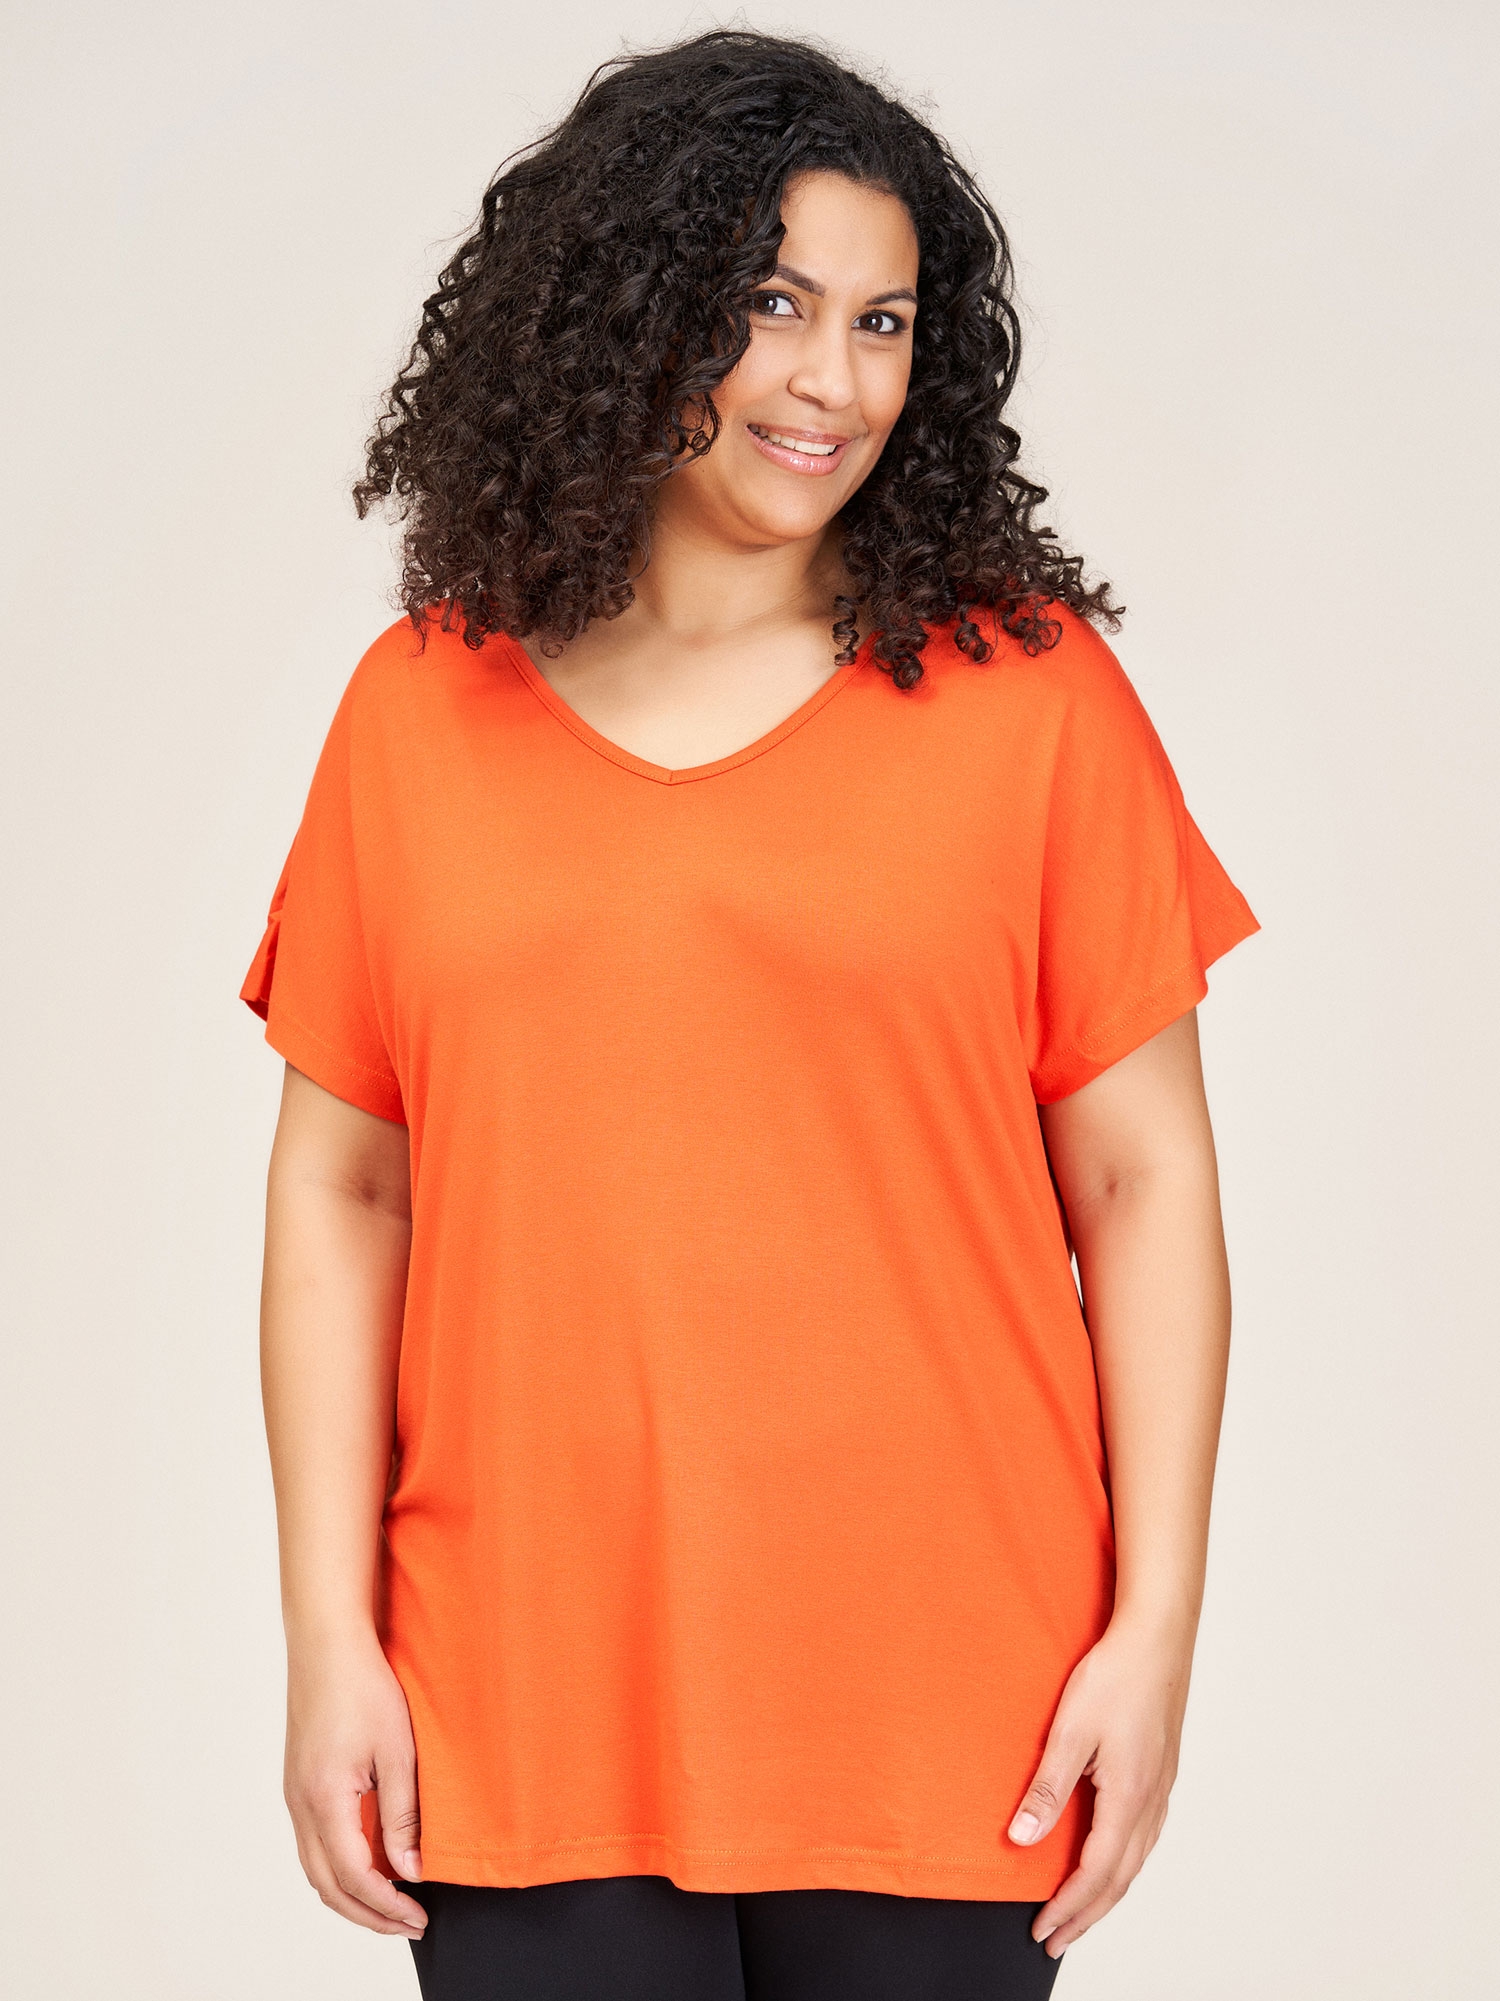 AMSTERDAM - Orange basis t-shirt i viskose jersey fra Sandgaard